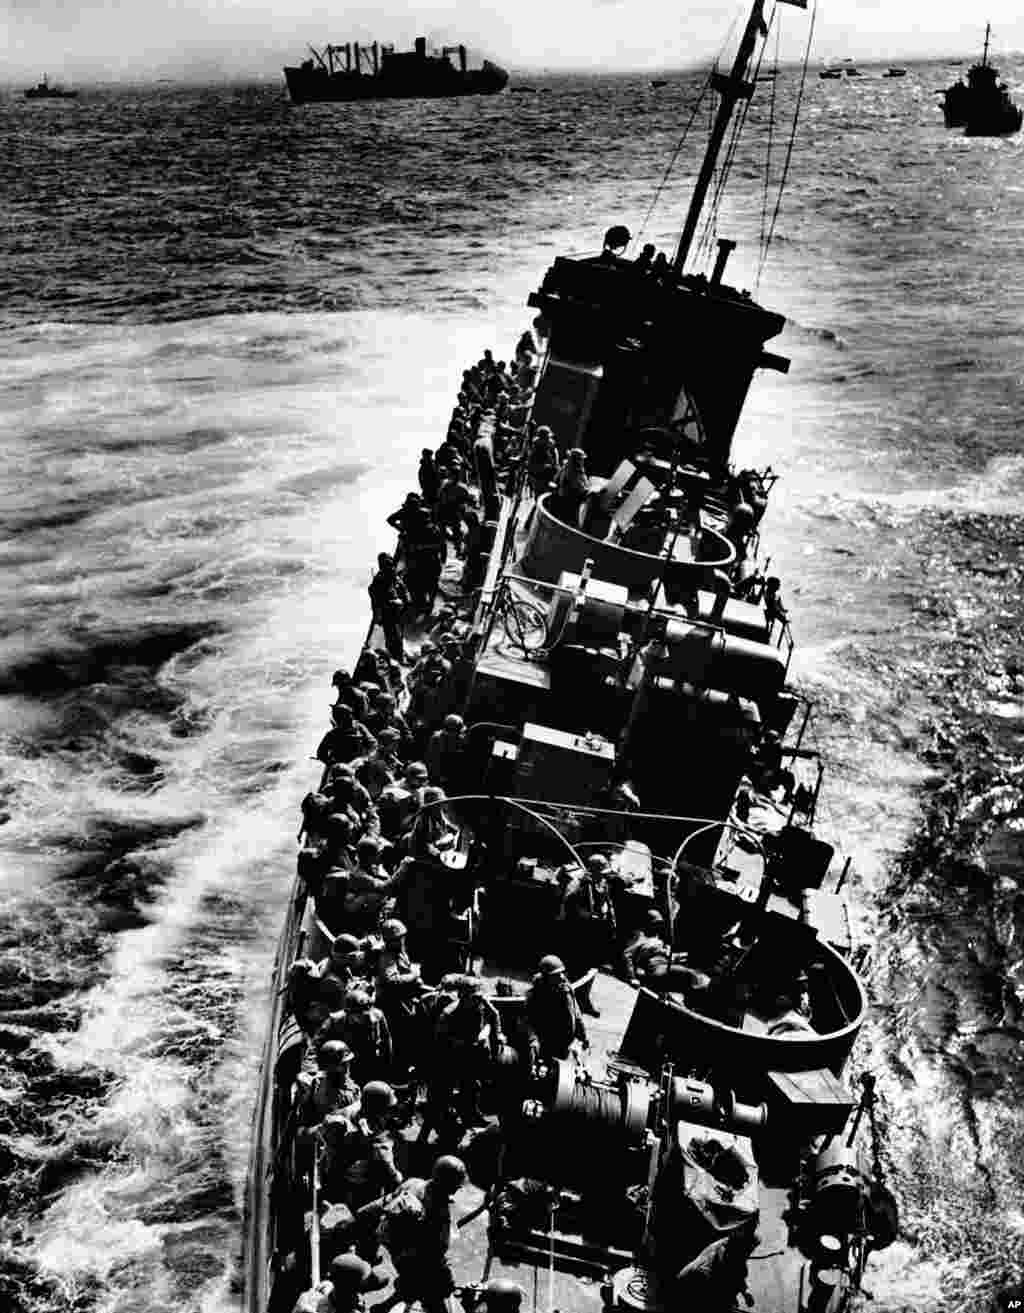 Sebuah pesawat penjaga kapal LCI merapat ke pelabuhan dengan ditarik oleh sebuah kapal transportasi yang digunakan untuk mengevakuasi tentara dan mereka yang terluka, sesaat sebelum pesawat itu terbalik dan tenggelam di hari pertama invasi, 6 Juni 1944.